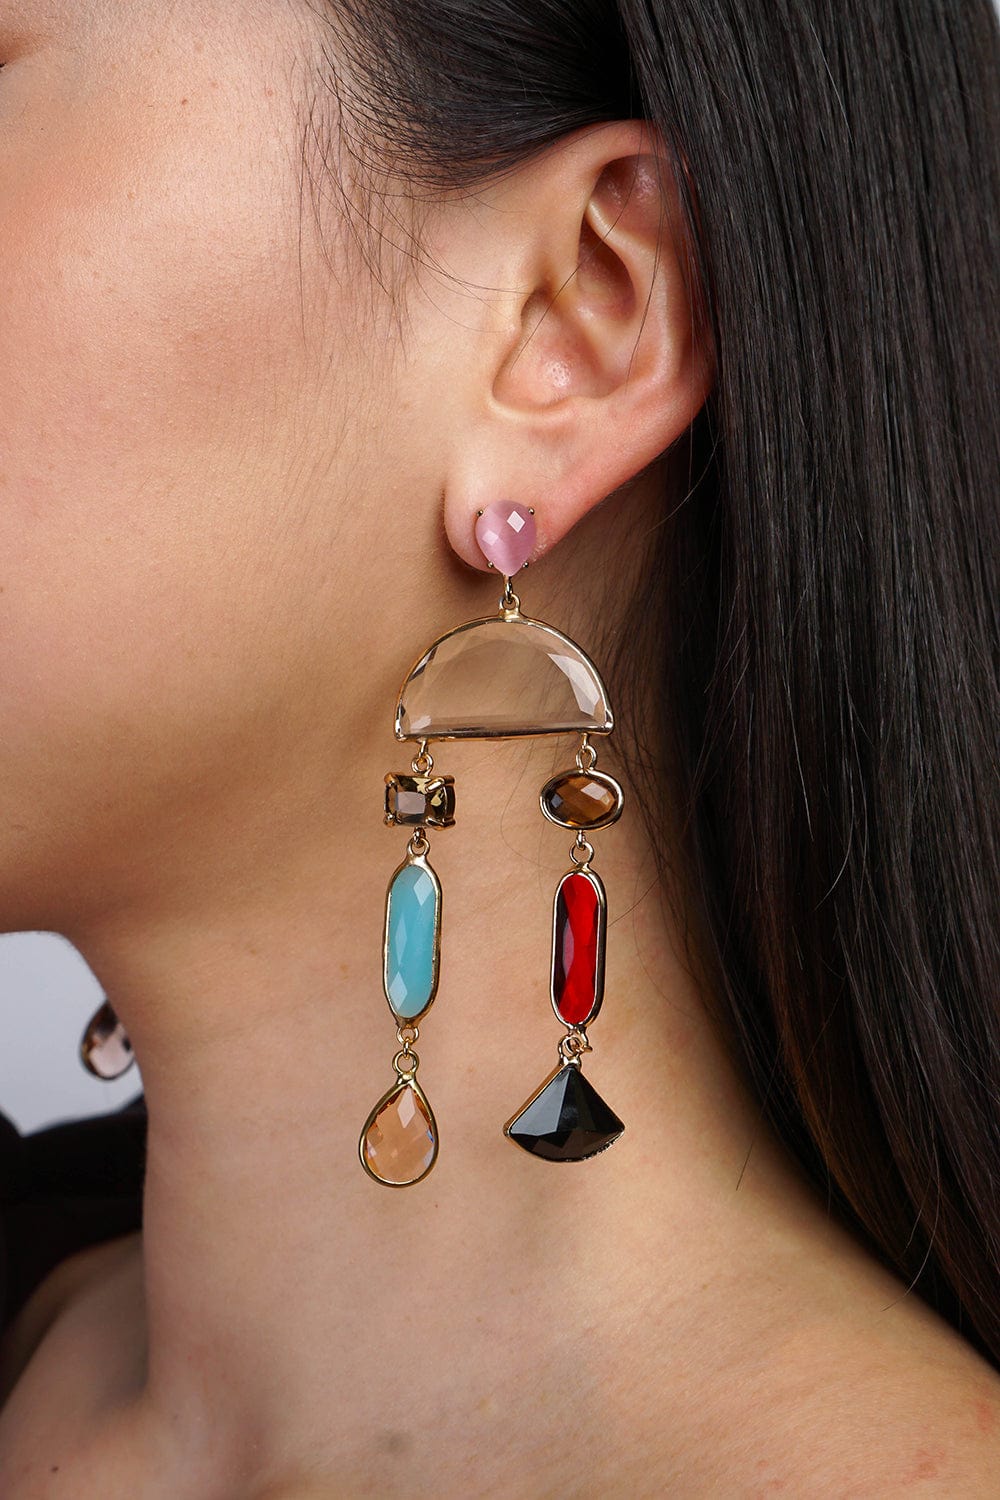 DCD EARRINGS Multicolored Crystals Dangle Earrings